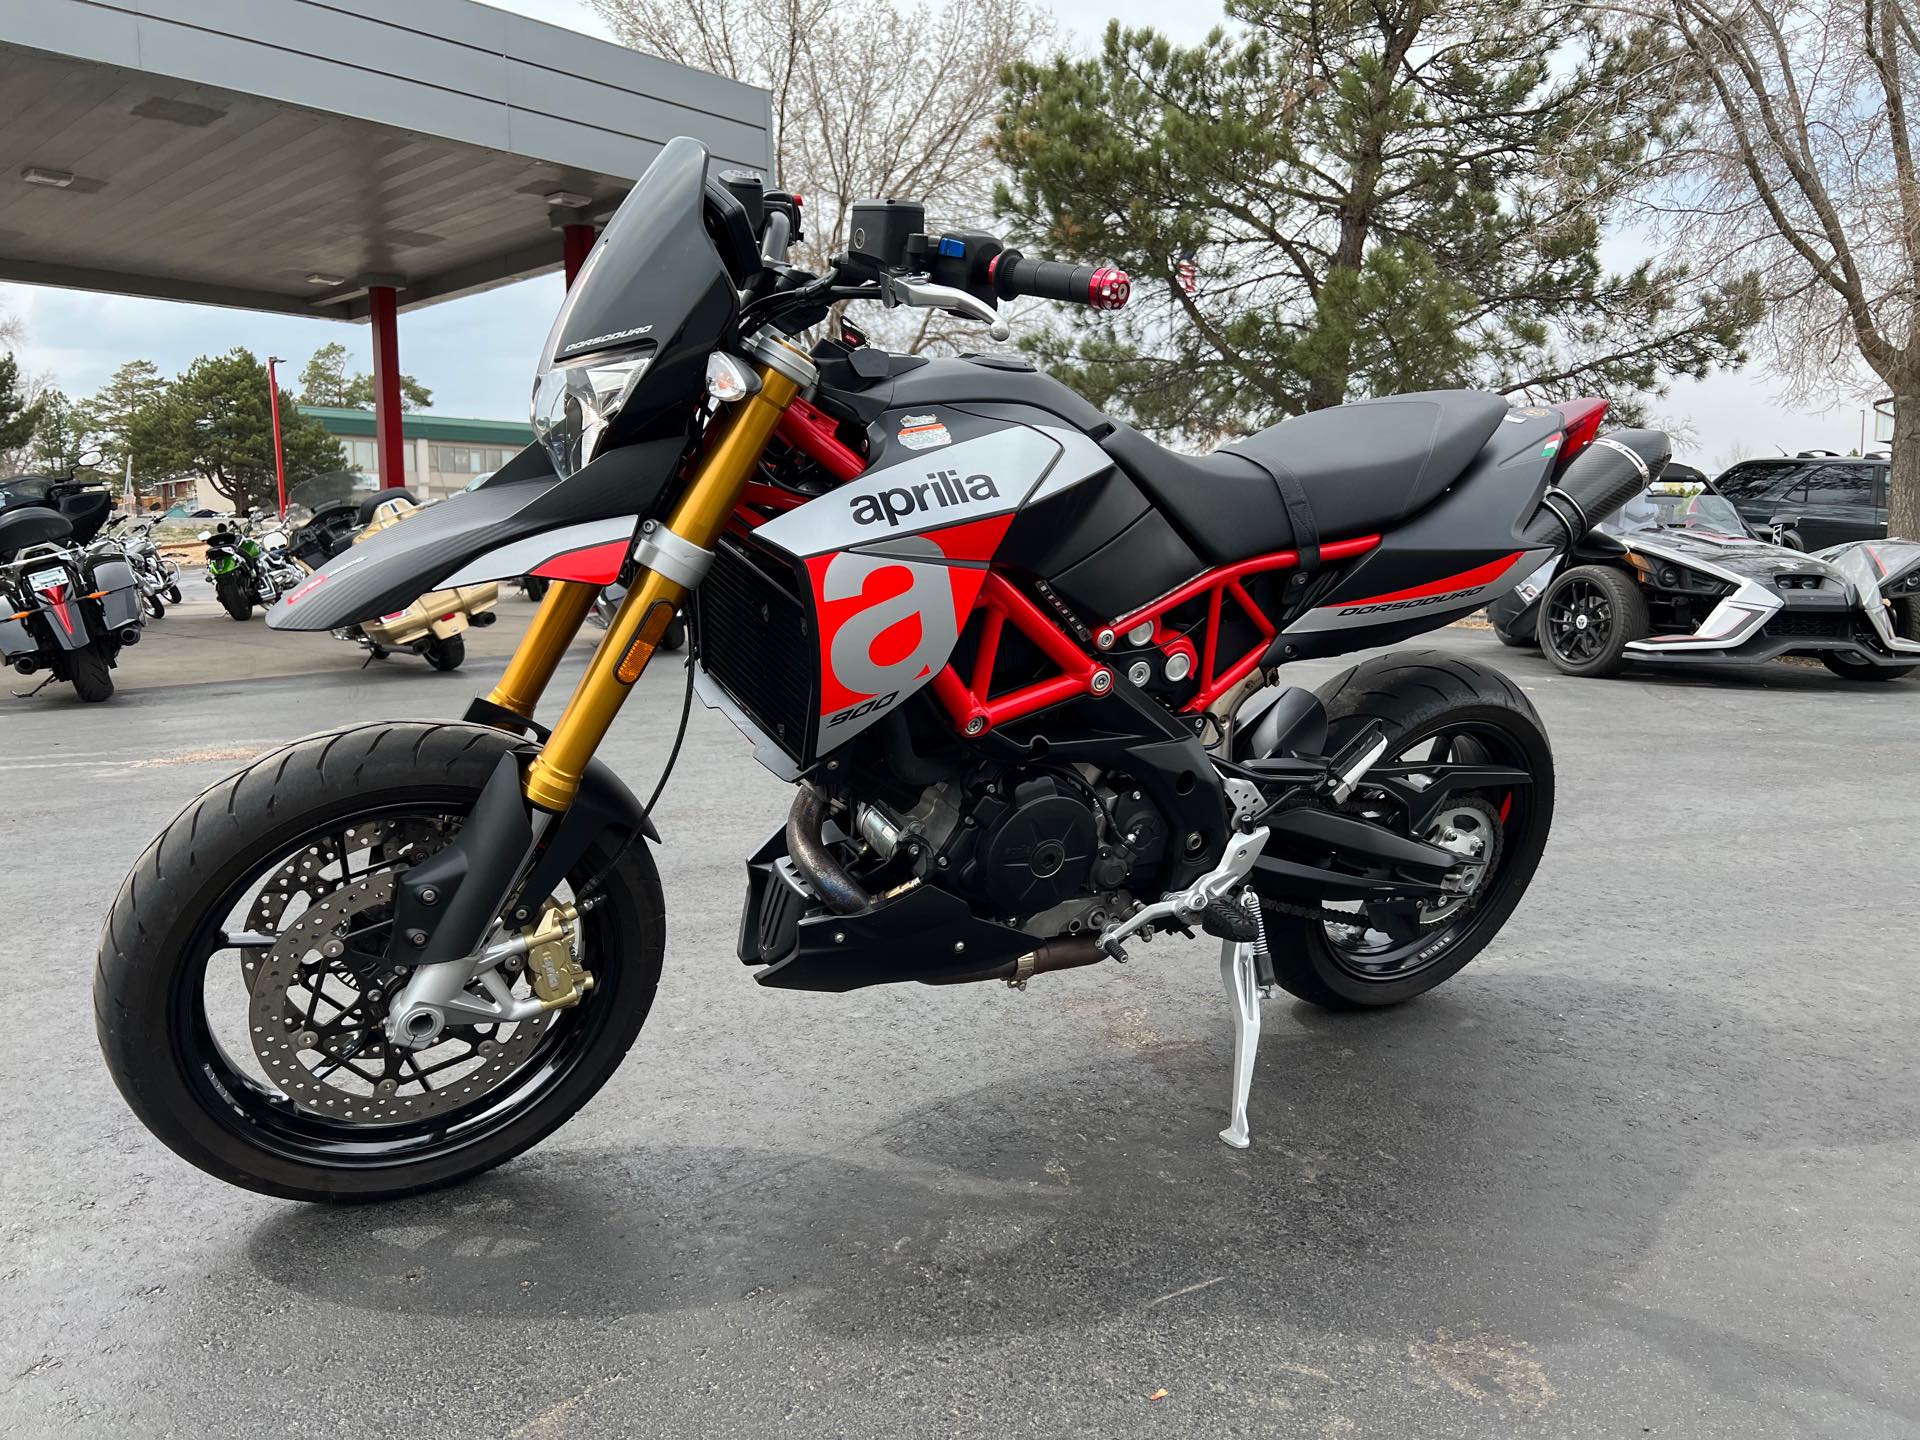 2018 Aprilia Dorsoduro 900 at Aces Motorcycles - Fort Collins